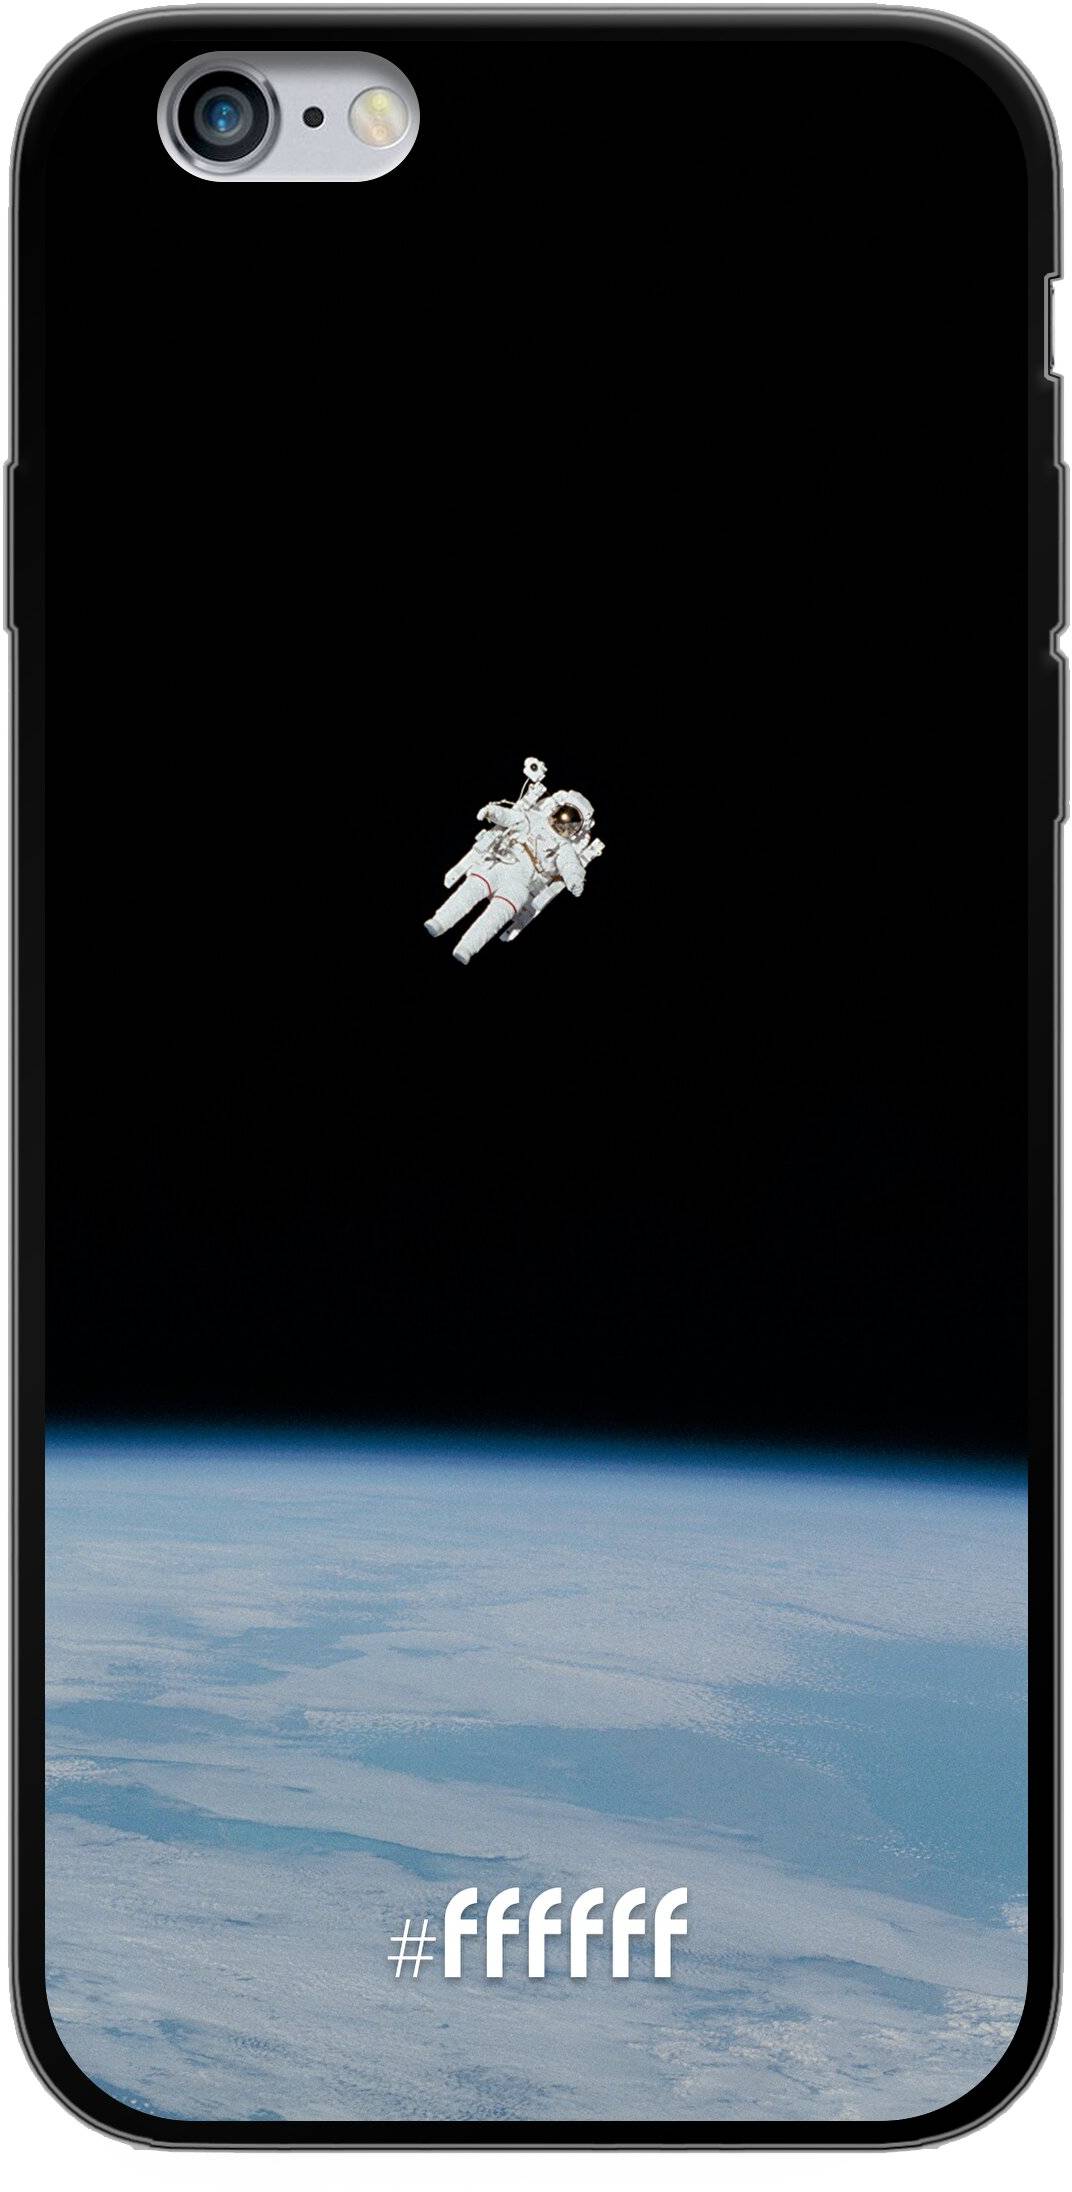 Spacewalk iPhone 6